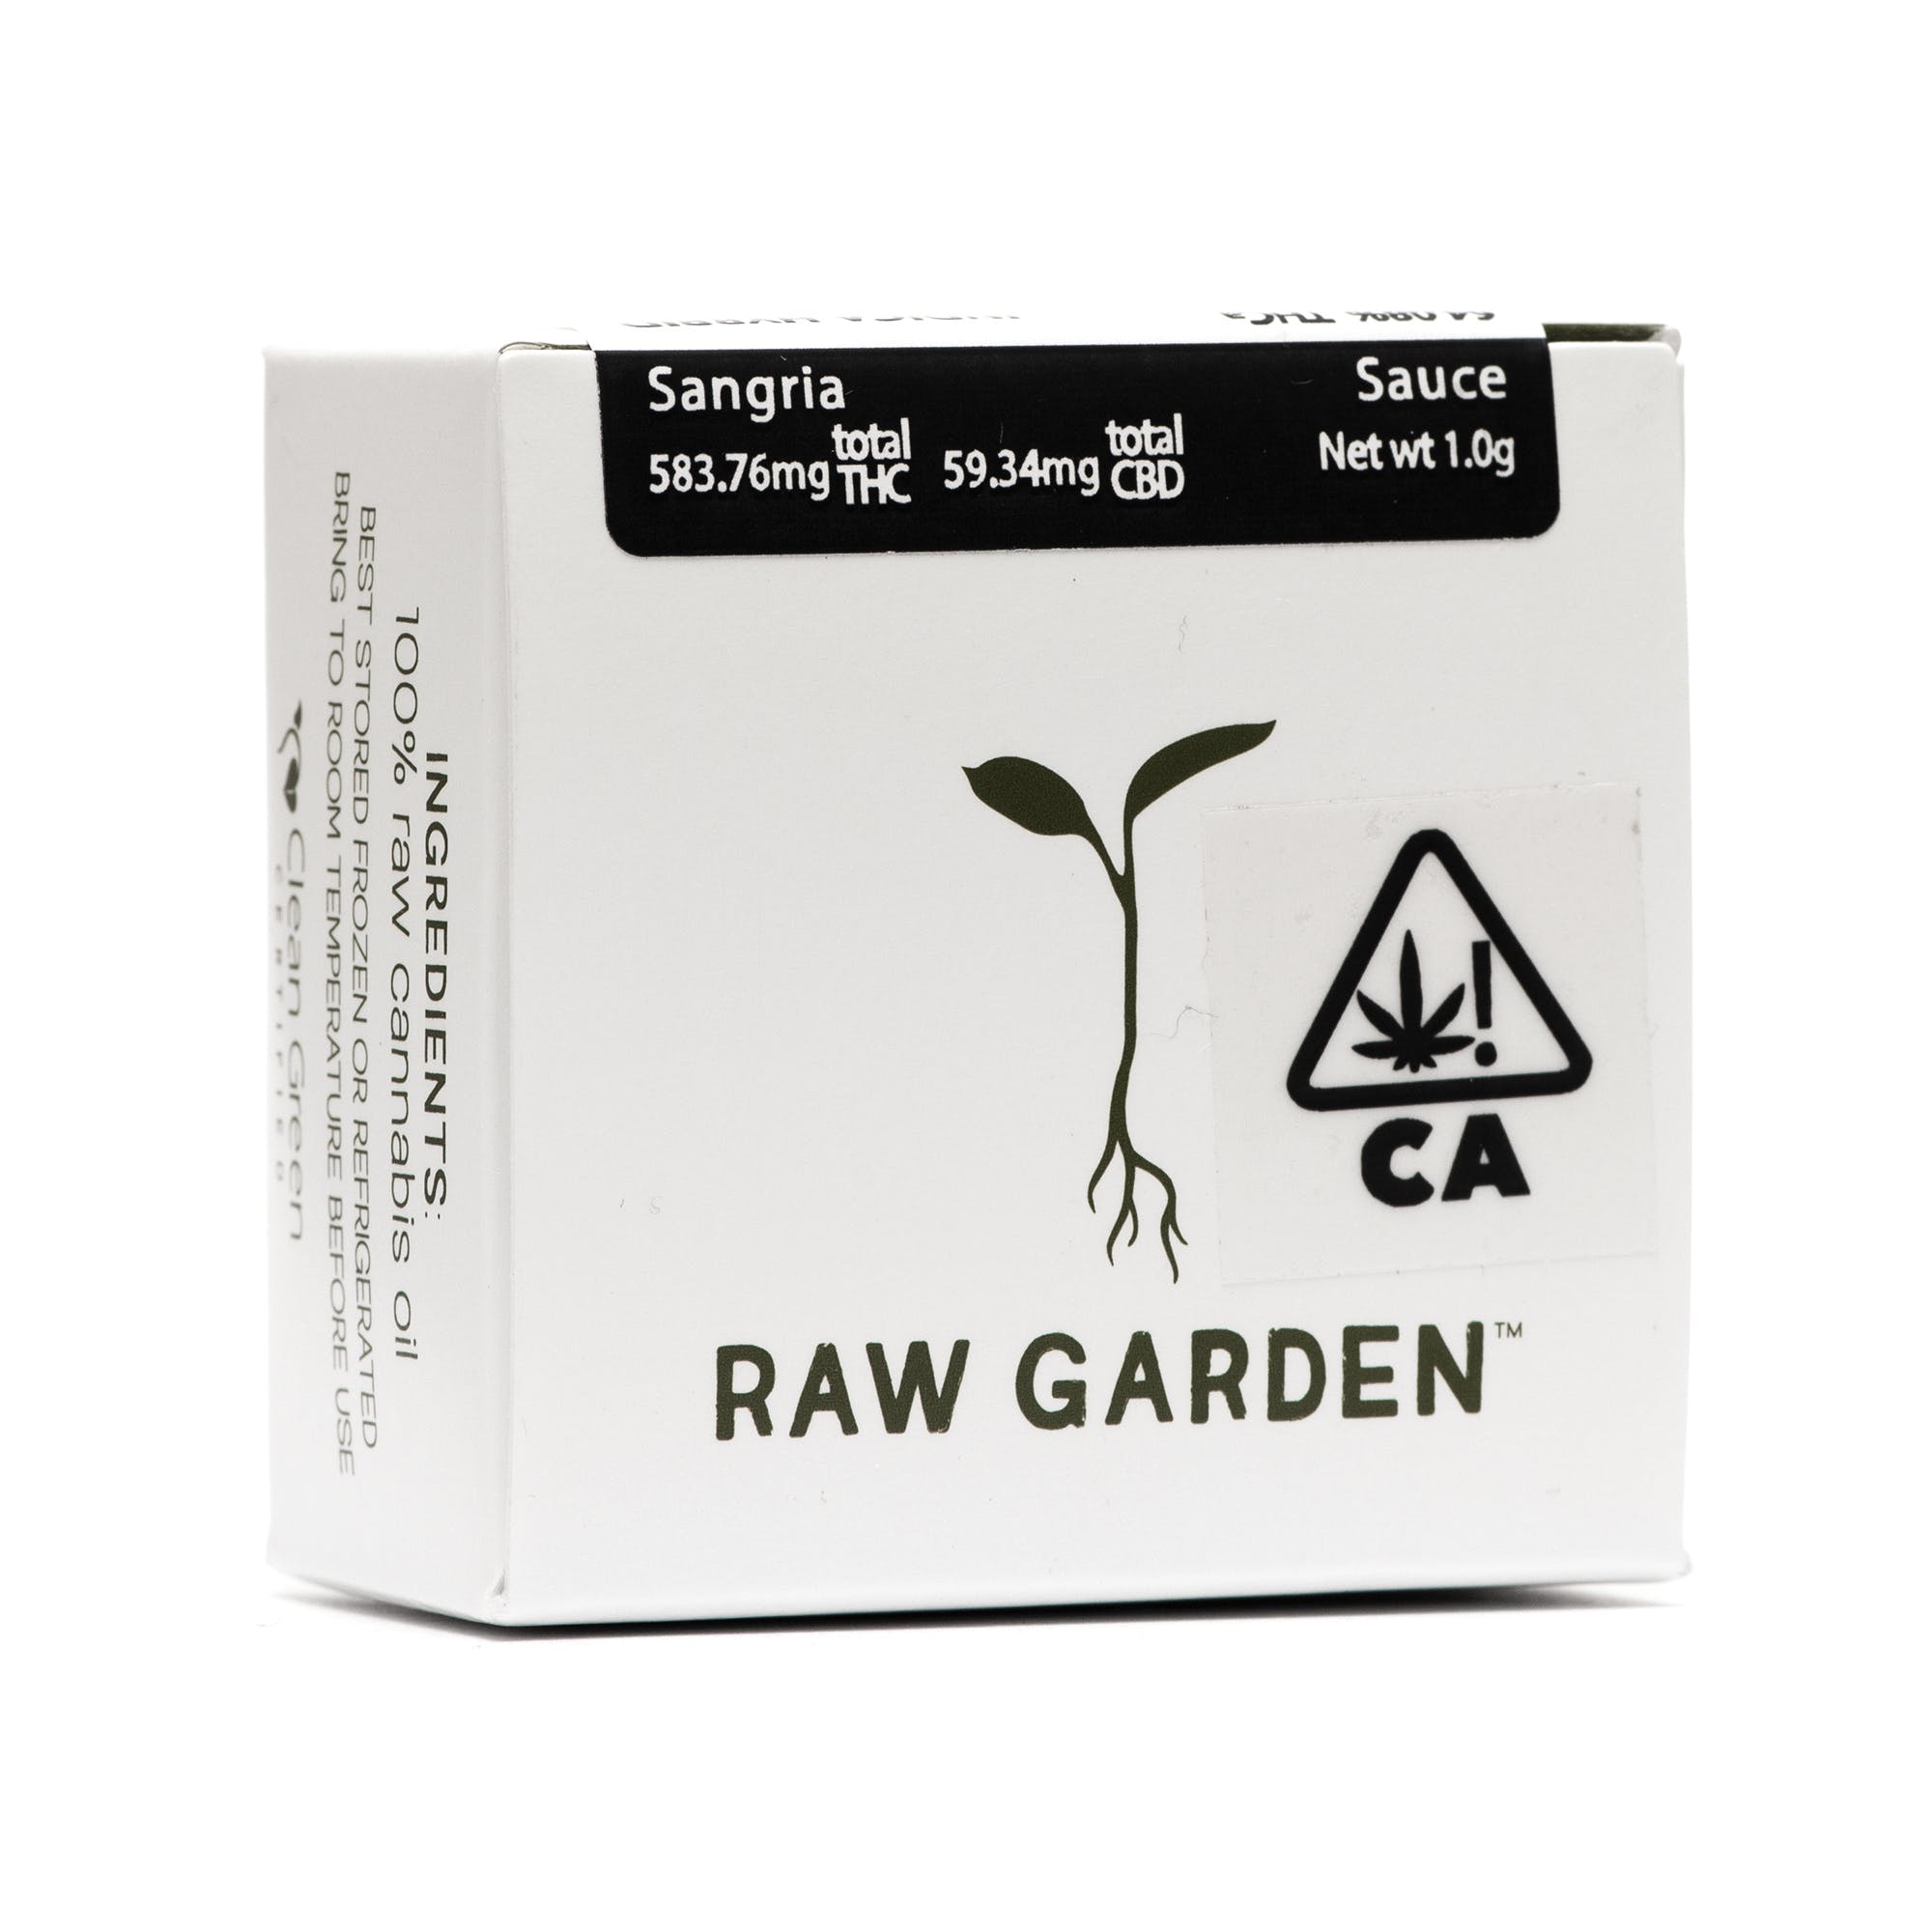 Medical/Online(21+) Raw Garden - Sangria Sauce